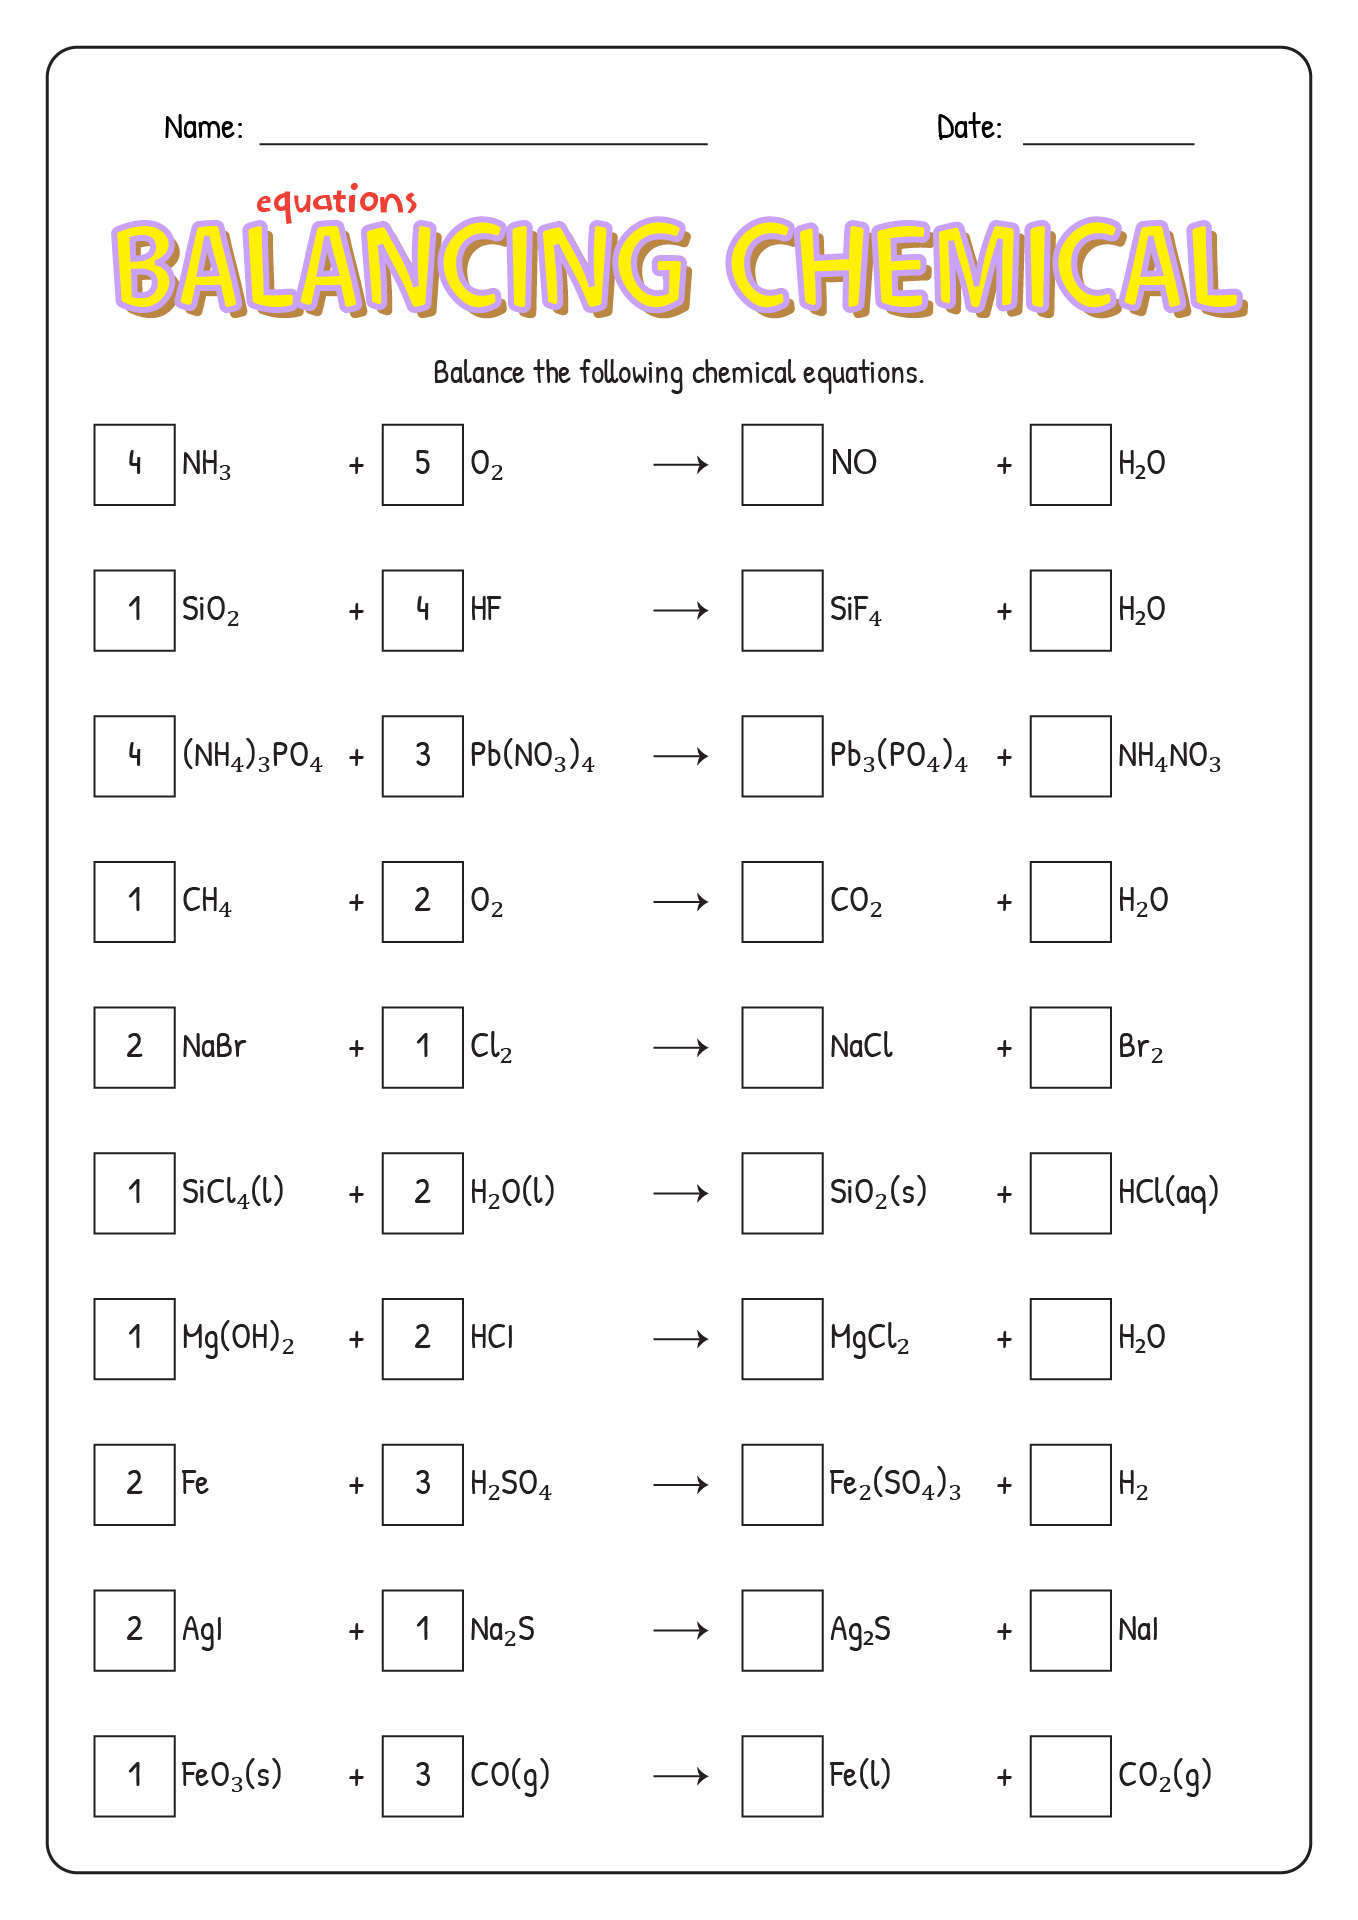 Balancing Chemical Equations Examples